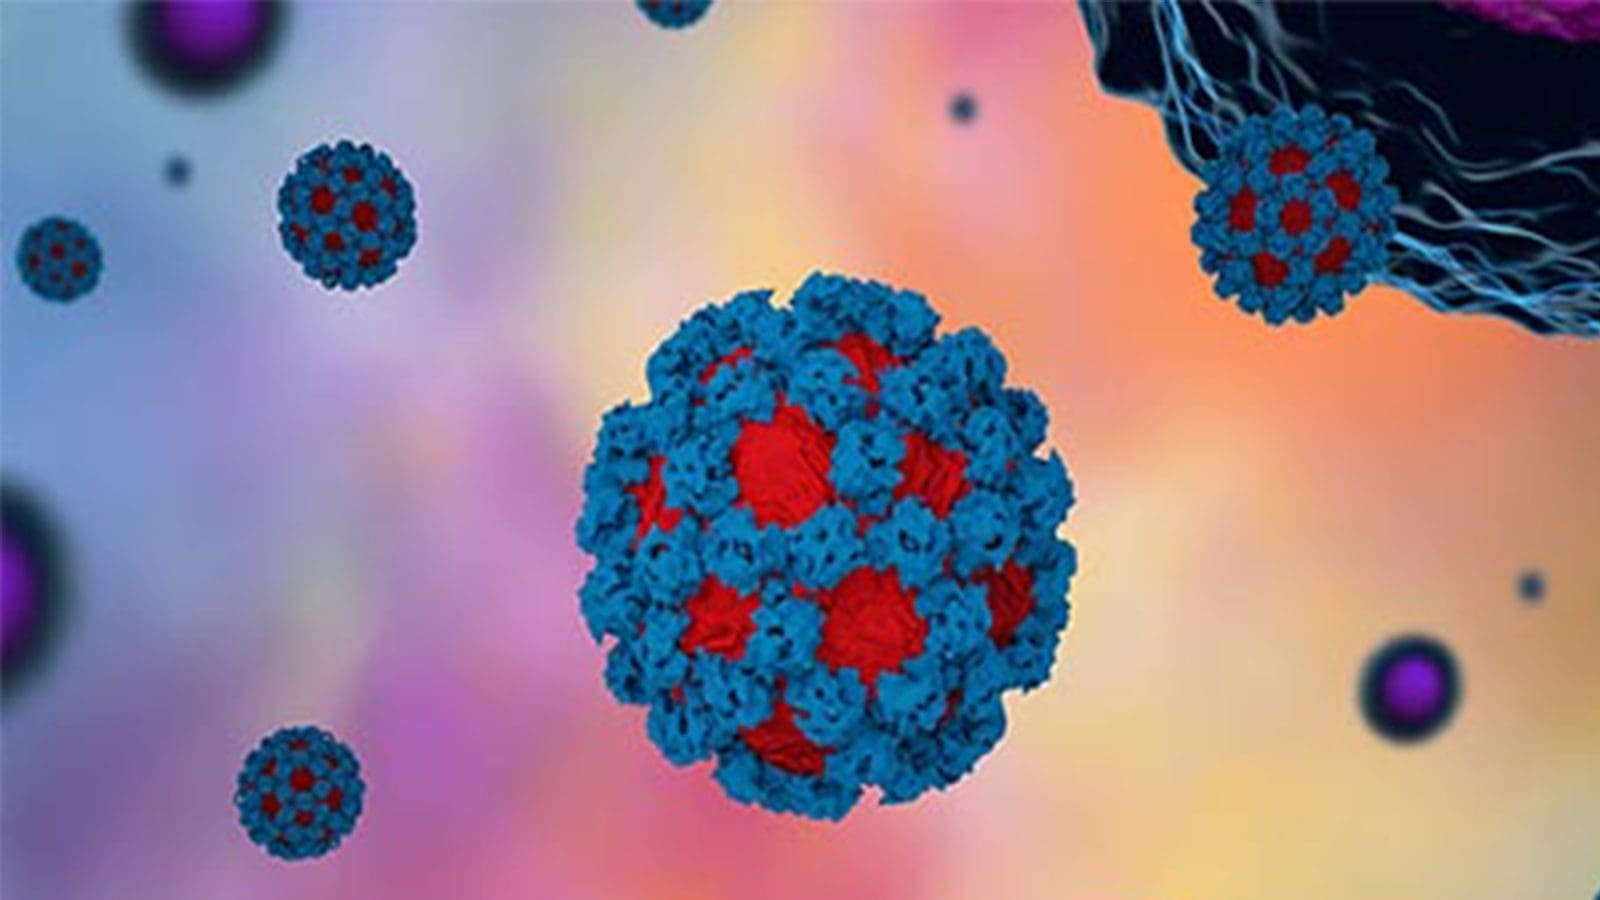 Washington University researchers to develop vaccine for human norovirus